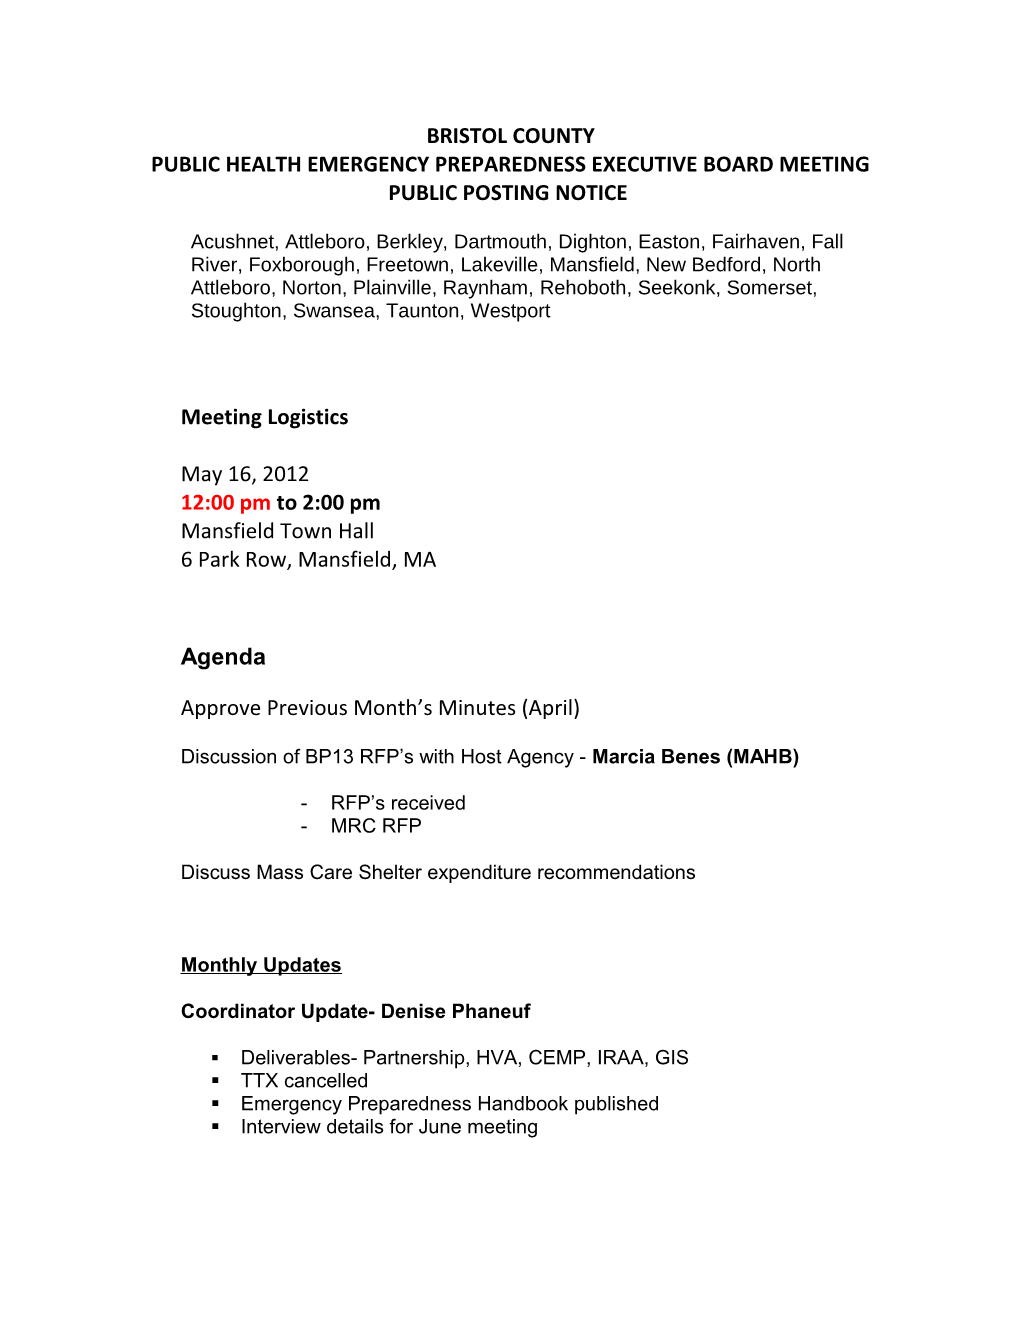 Public Health Emergency Preparedness Executive Board Meeting Public Posting Notice